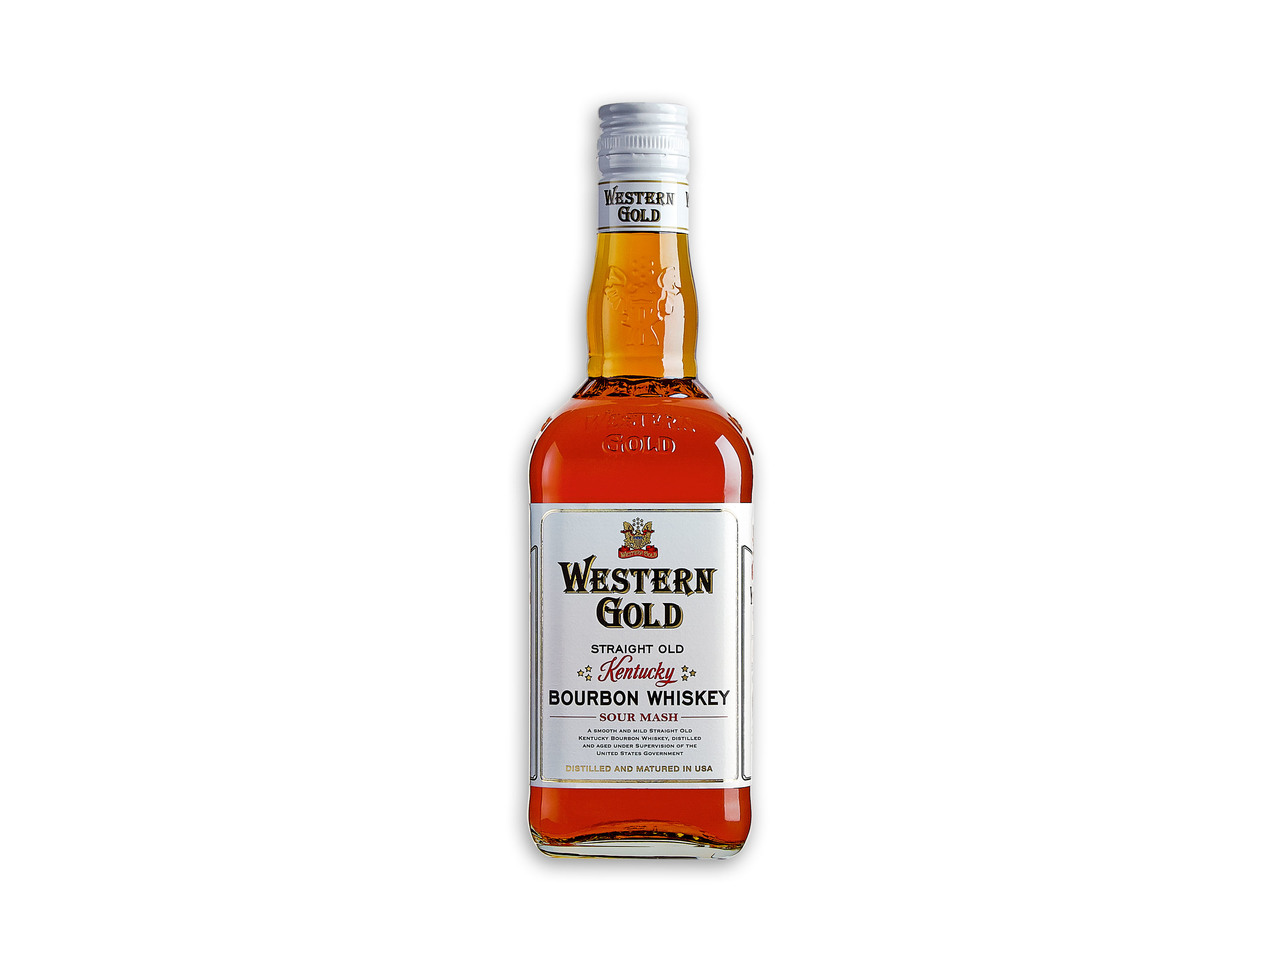 WESTERN GOLD(R) Bourbon Whiskey